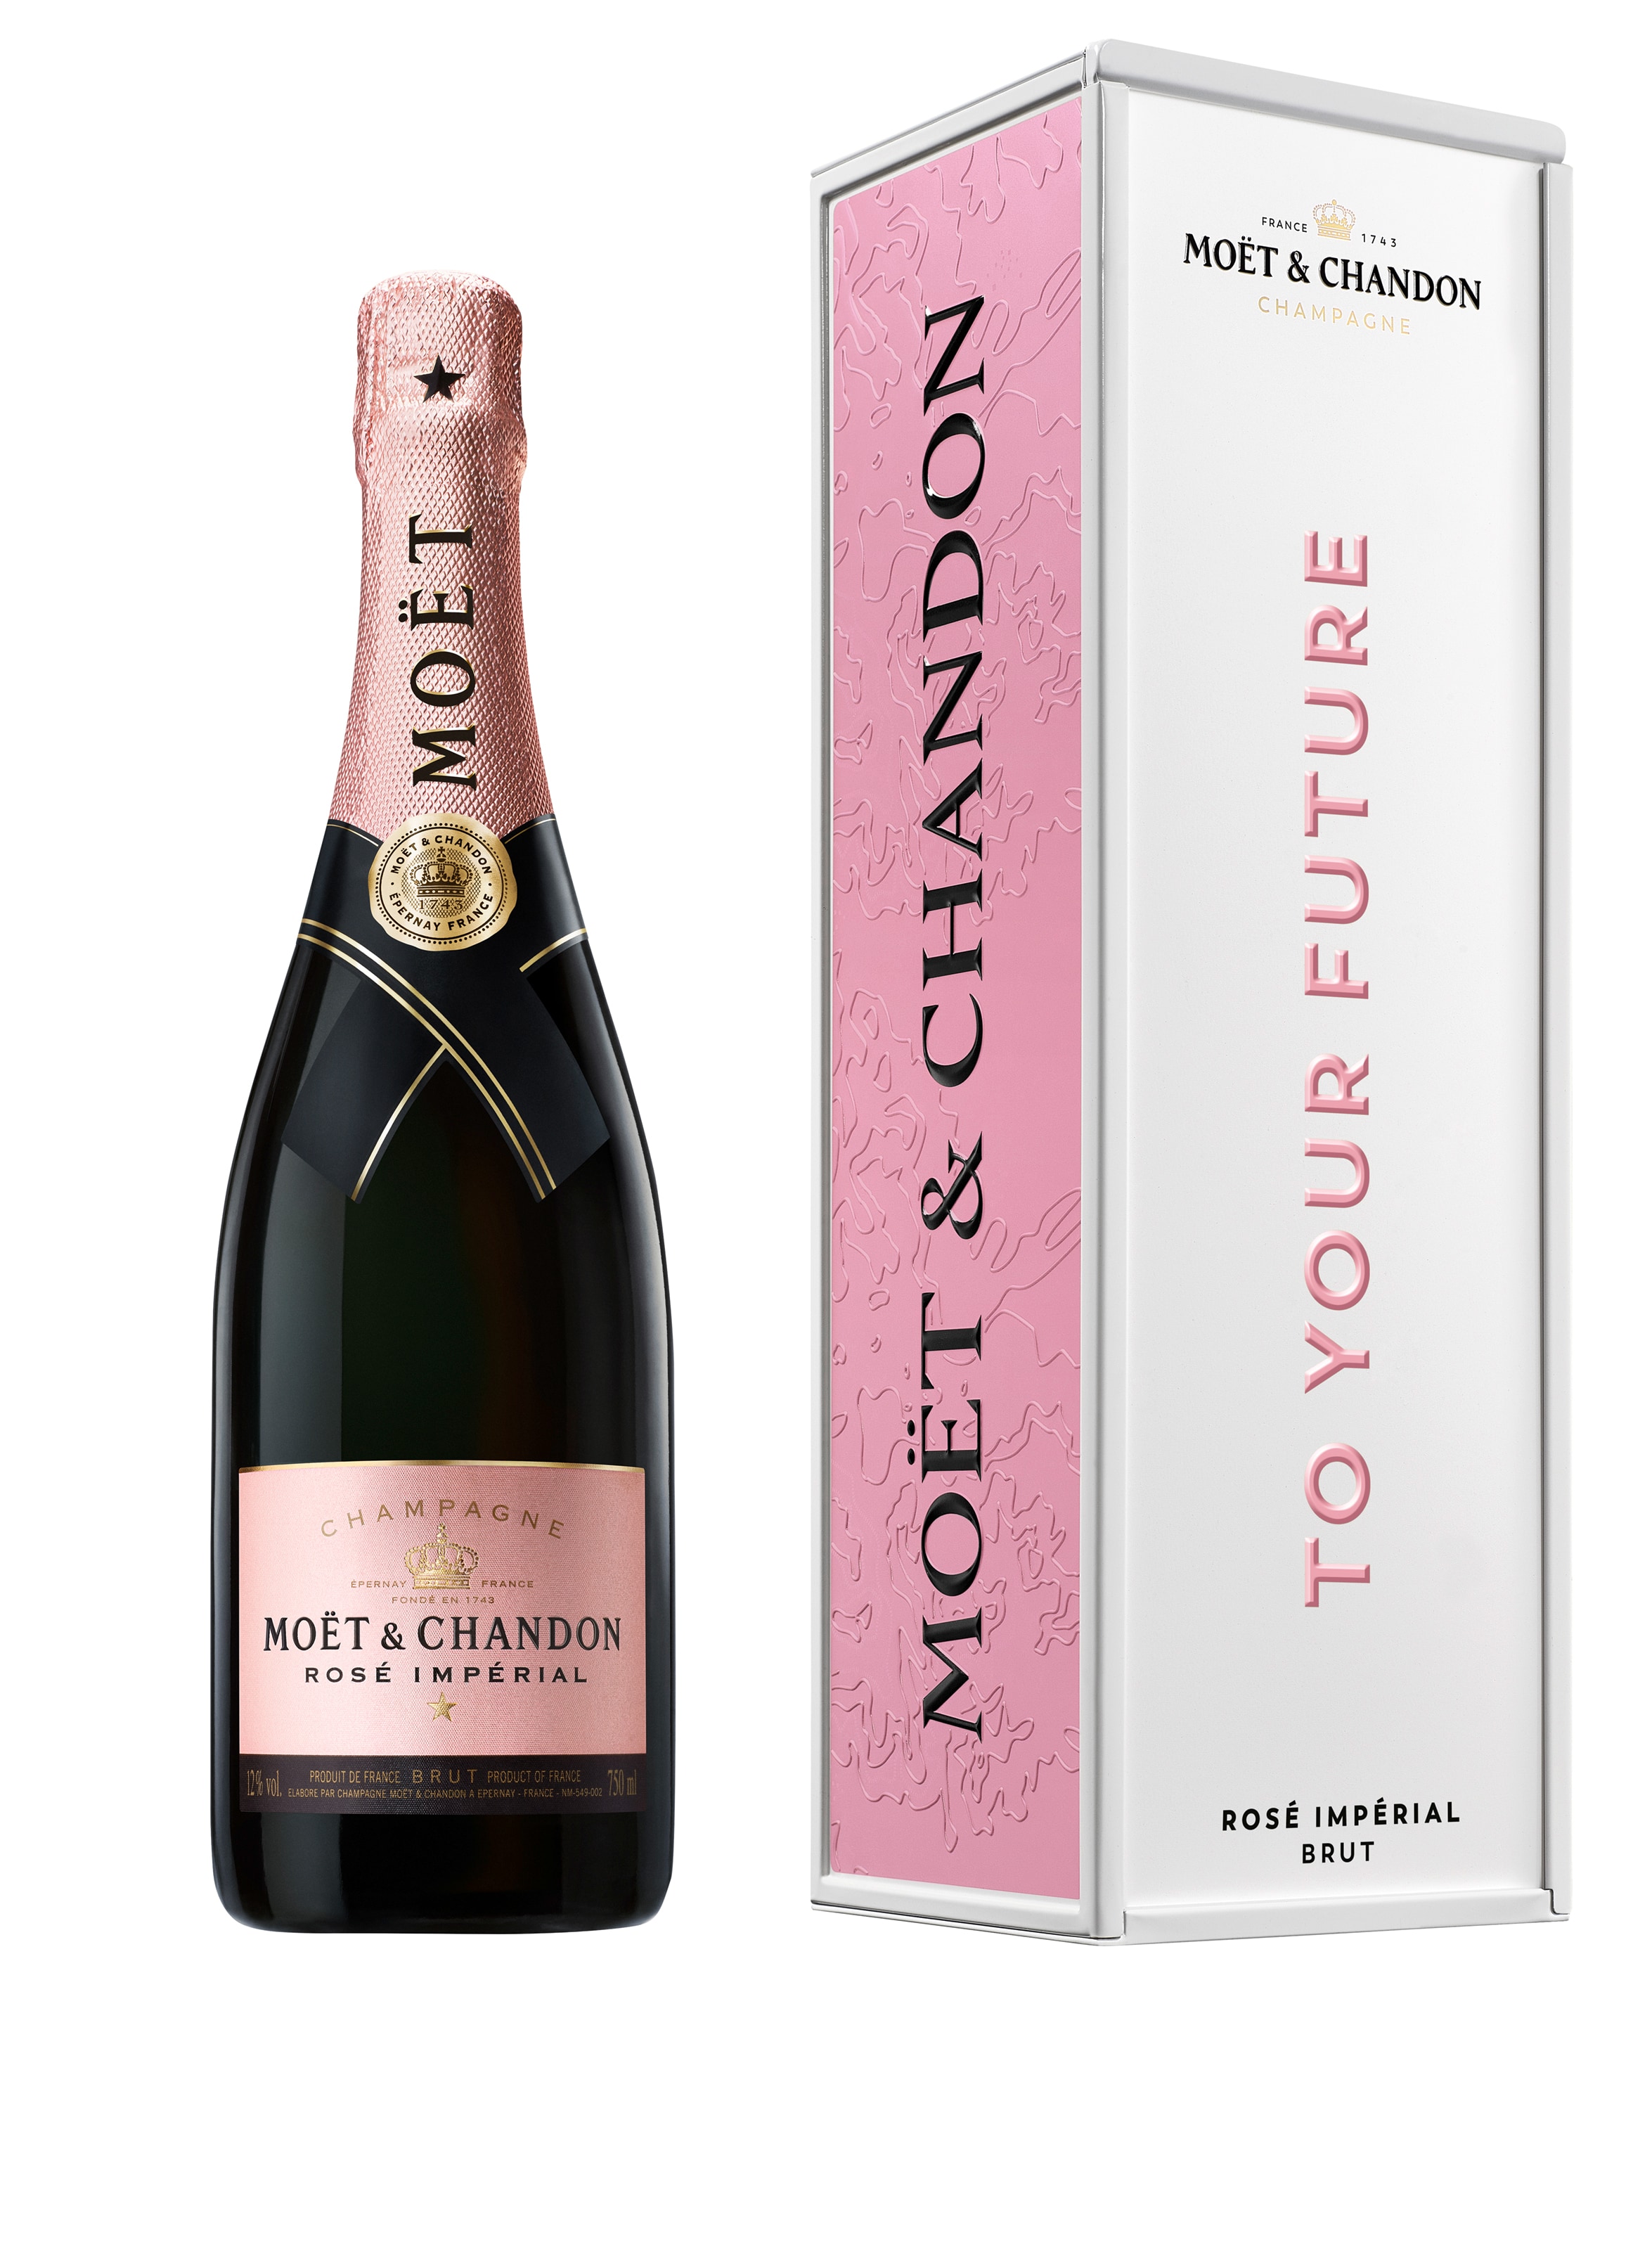 Moët & Chandon - LVMH  Moet chandon, Champagne, Rosé wine bottle